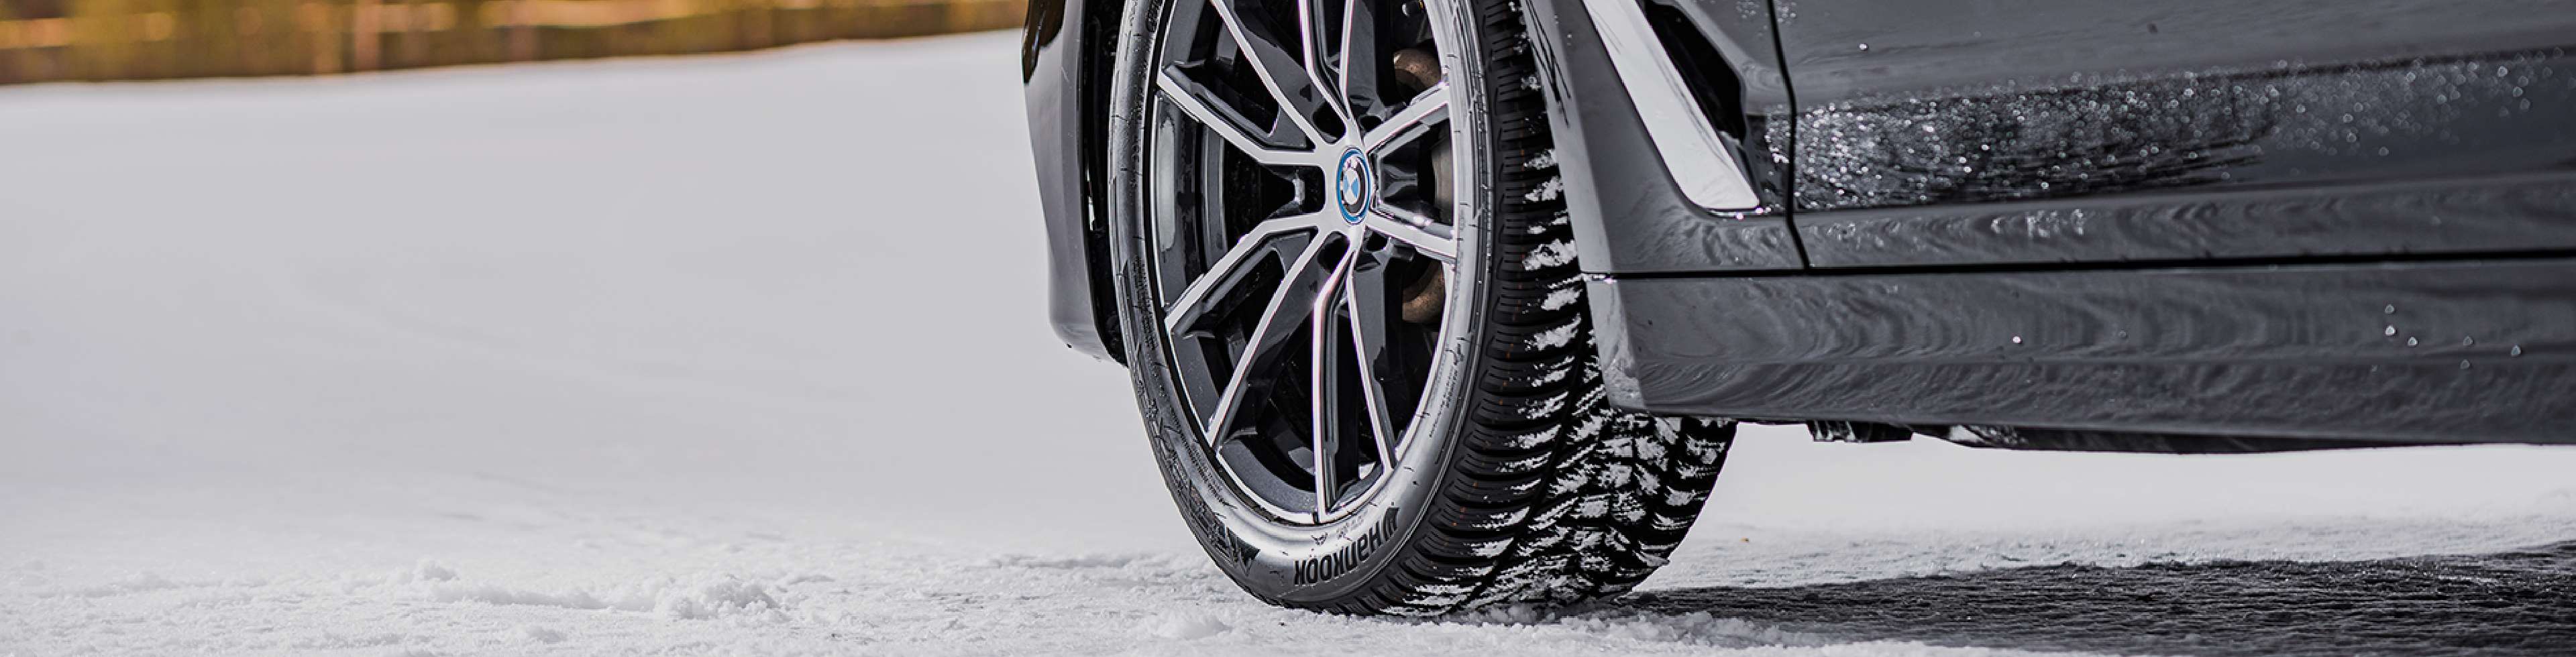 Winter Tires - Search By Season | Hankook Tire US site